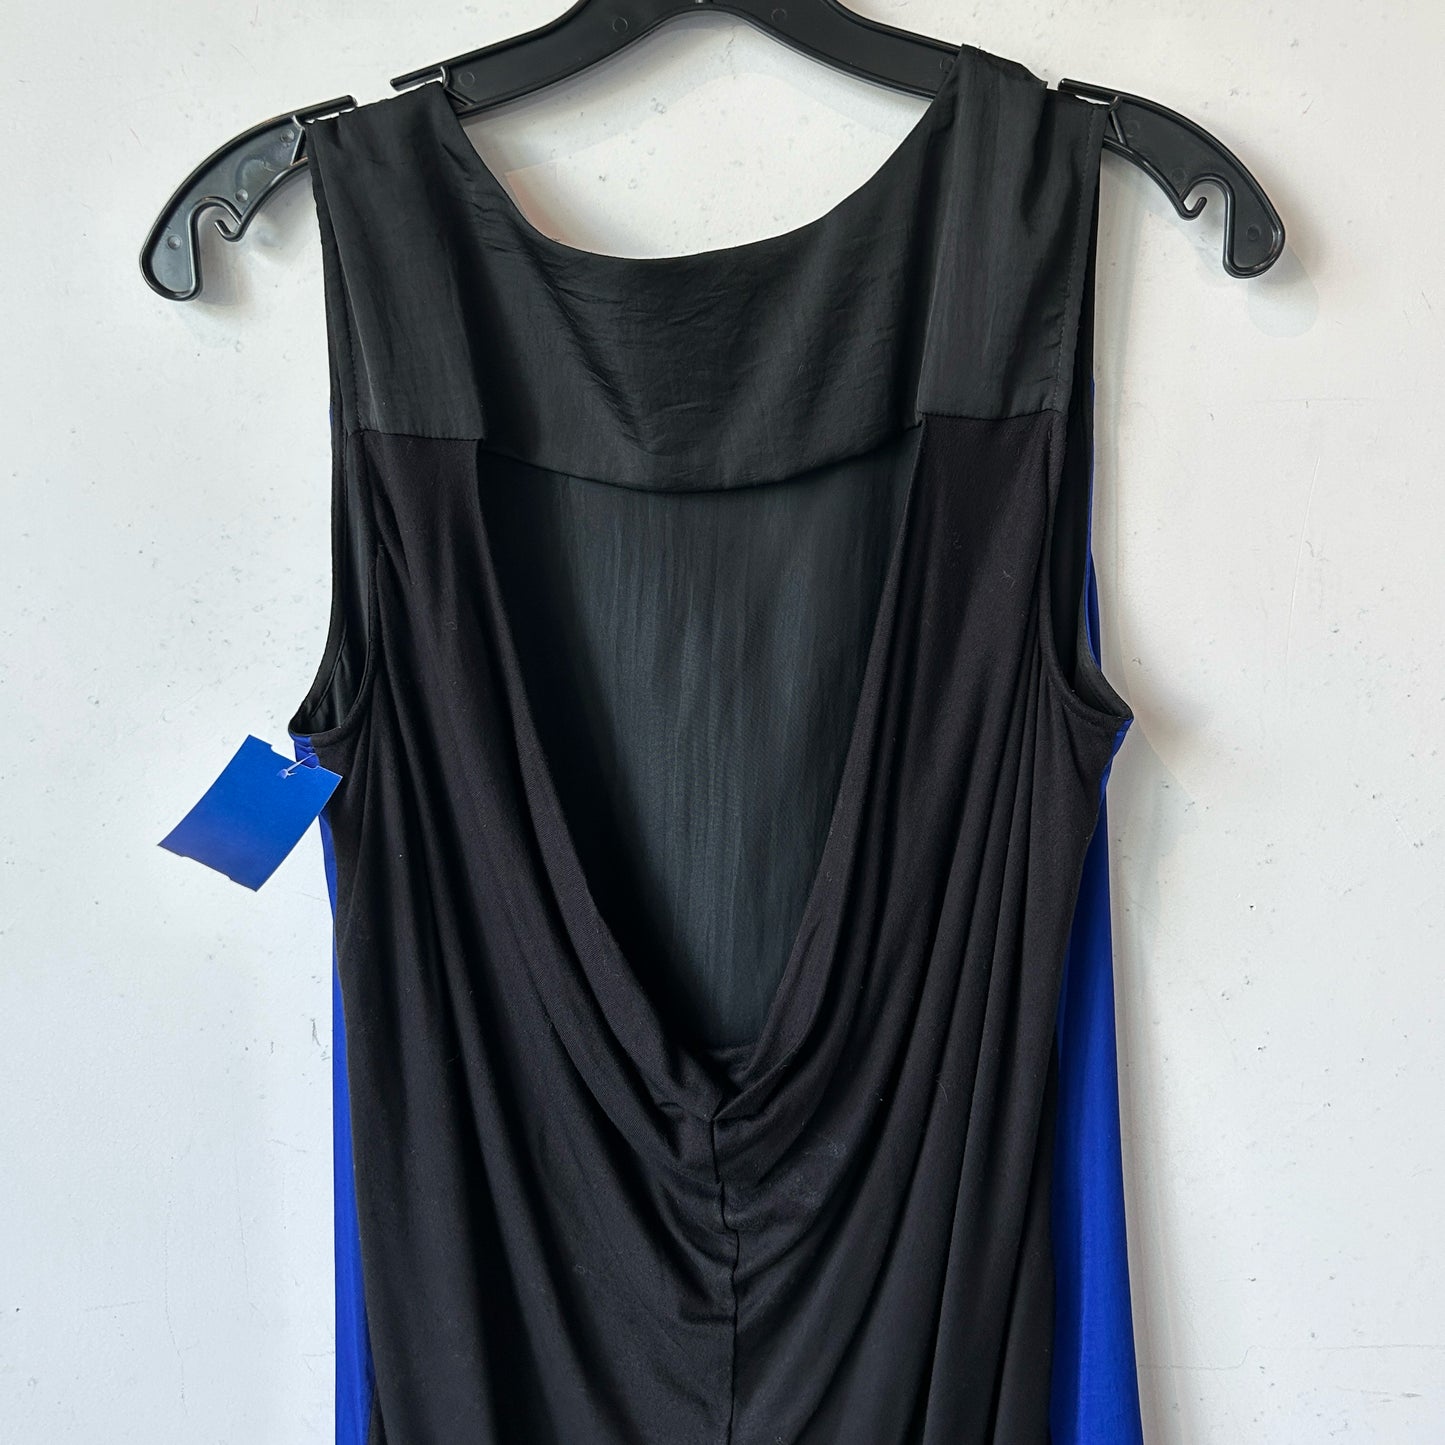 S Blue-Black BCBGMAXAZRIA Dress